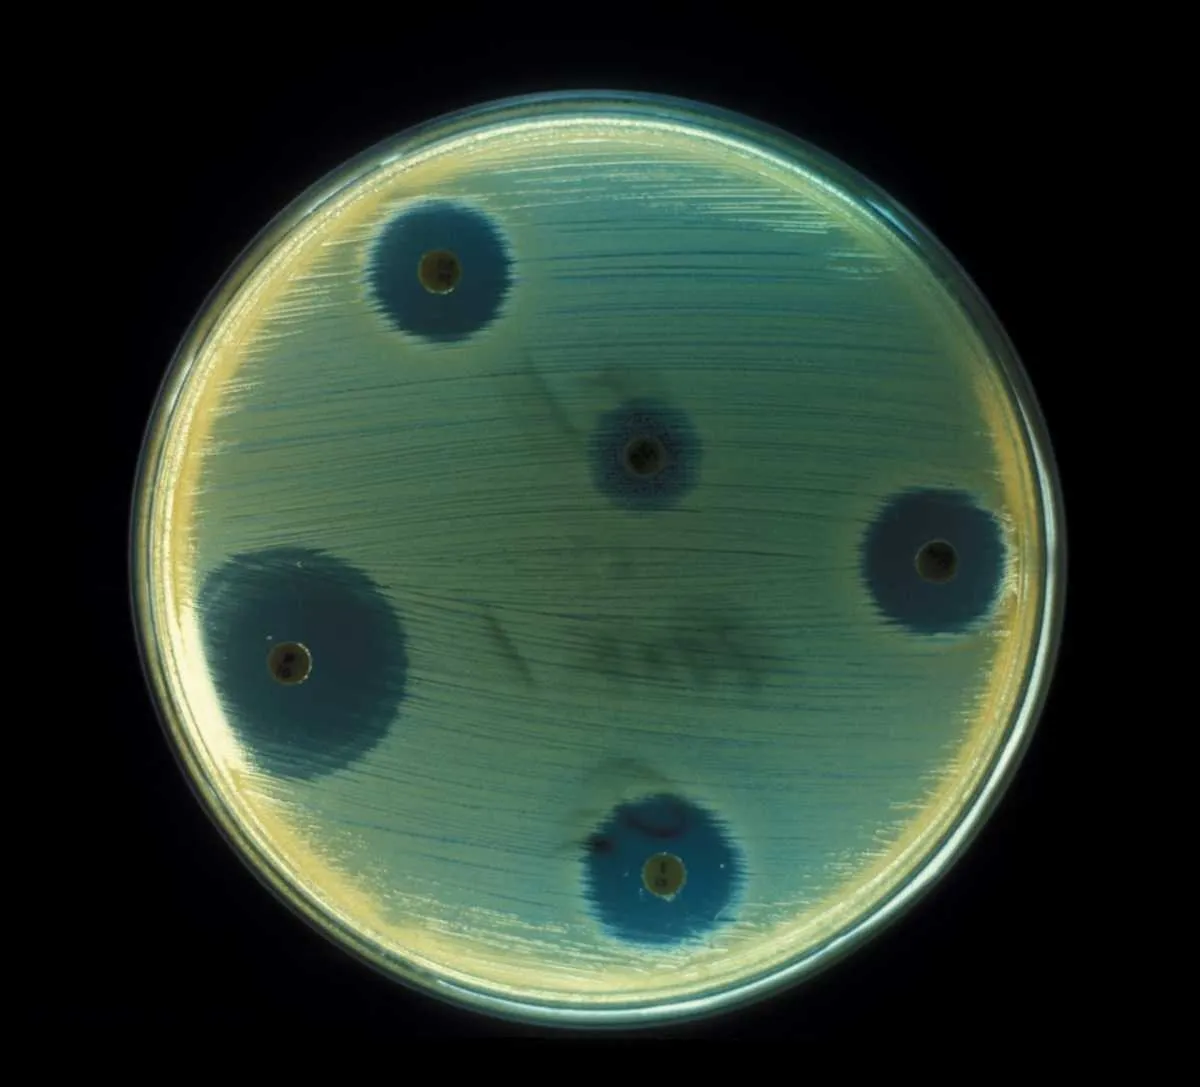 Staphylococcus Aureus (MRSA) © Smith Collection/Gado/Getty Images